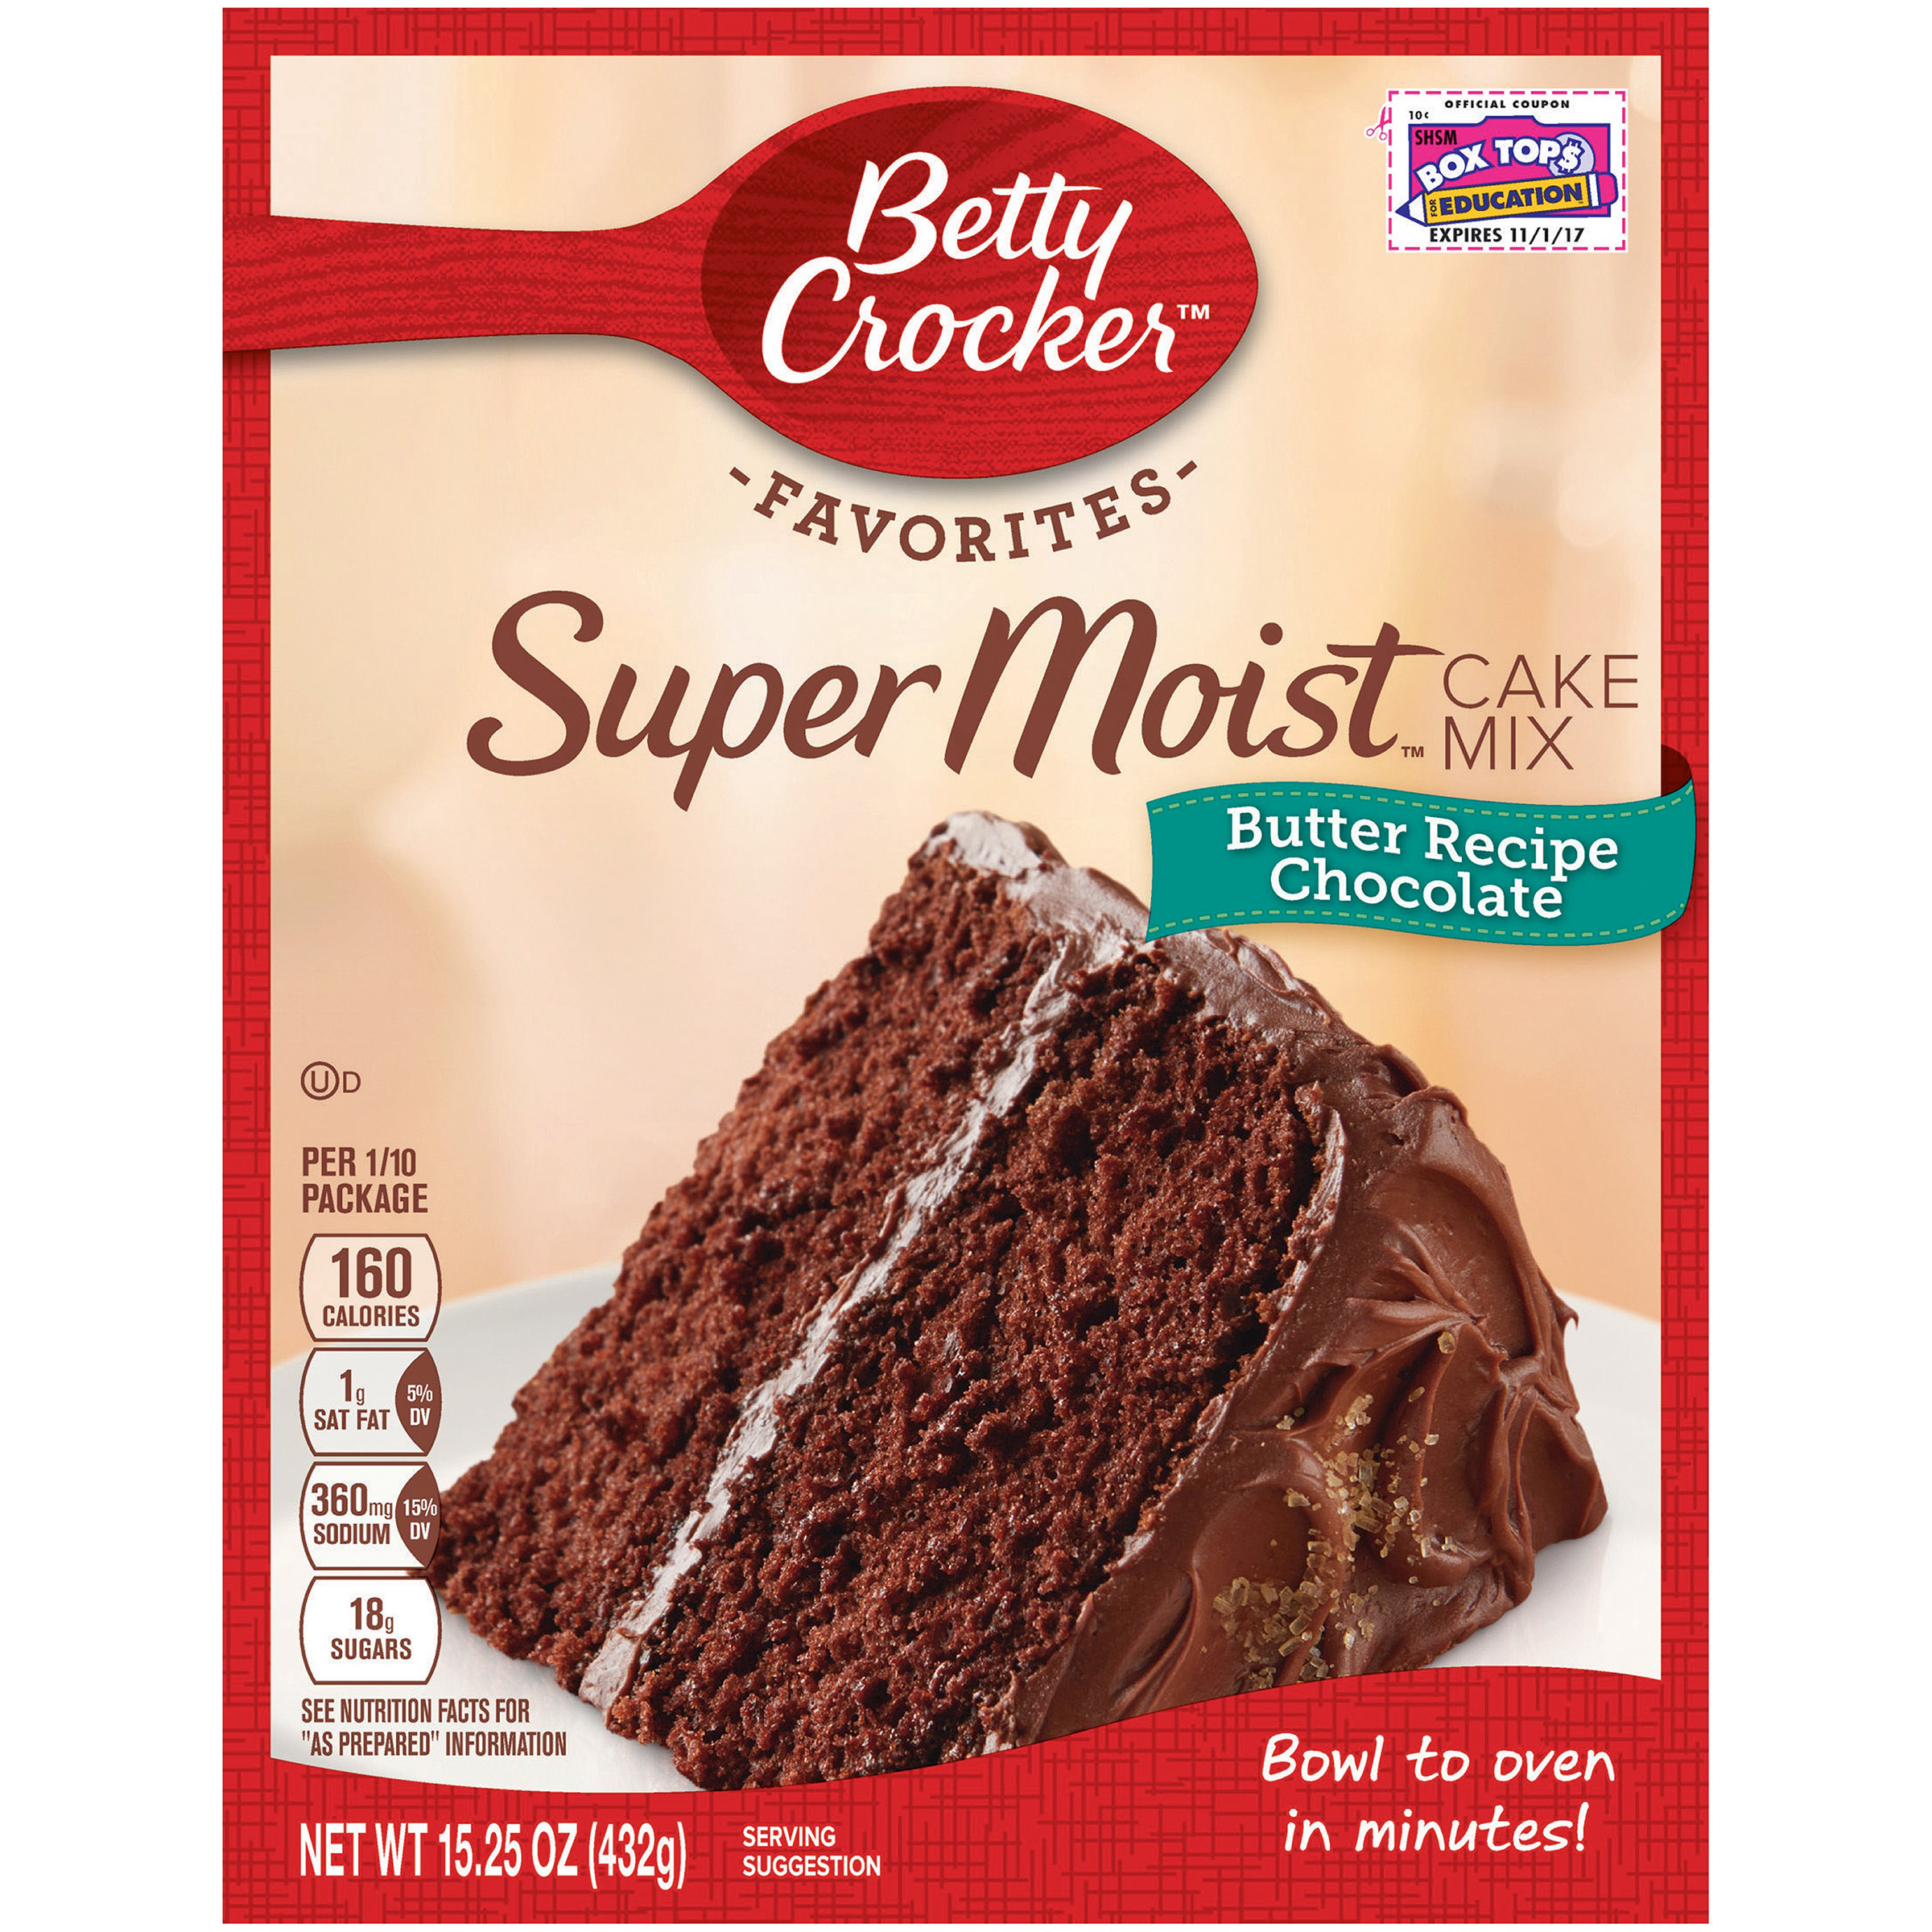 Box Chocolate Cake Mix Recipes
 betty crocker chocolate cake mix directions